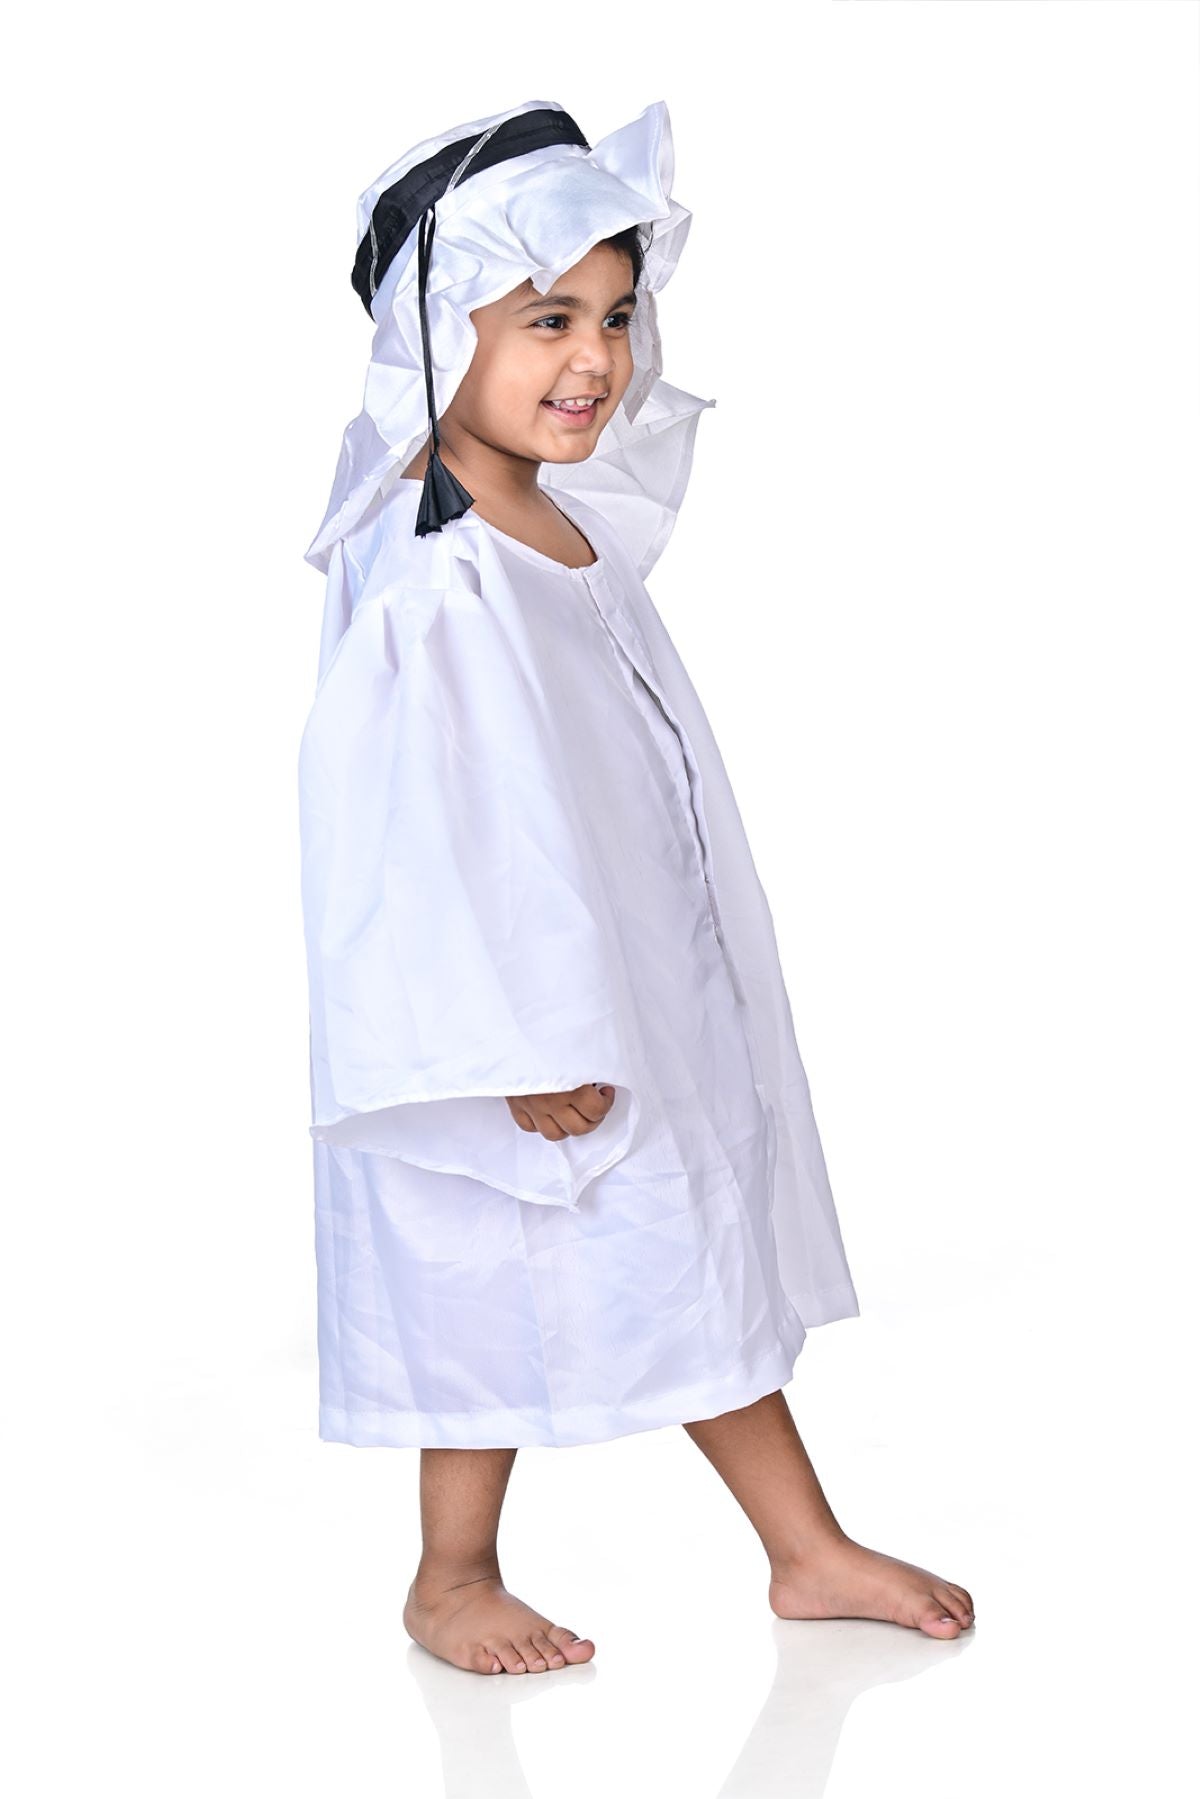 sheikh robe - Google Search | Traditional dresses, How to wear, Dubai dress  code